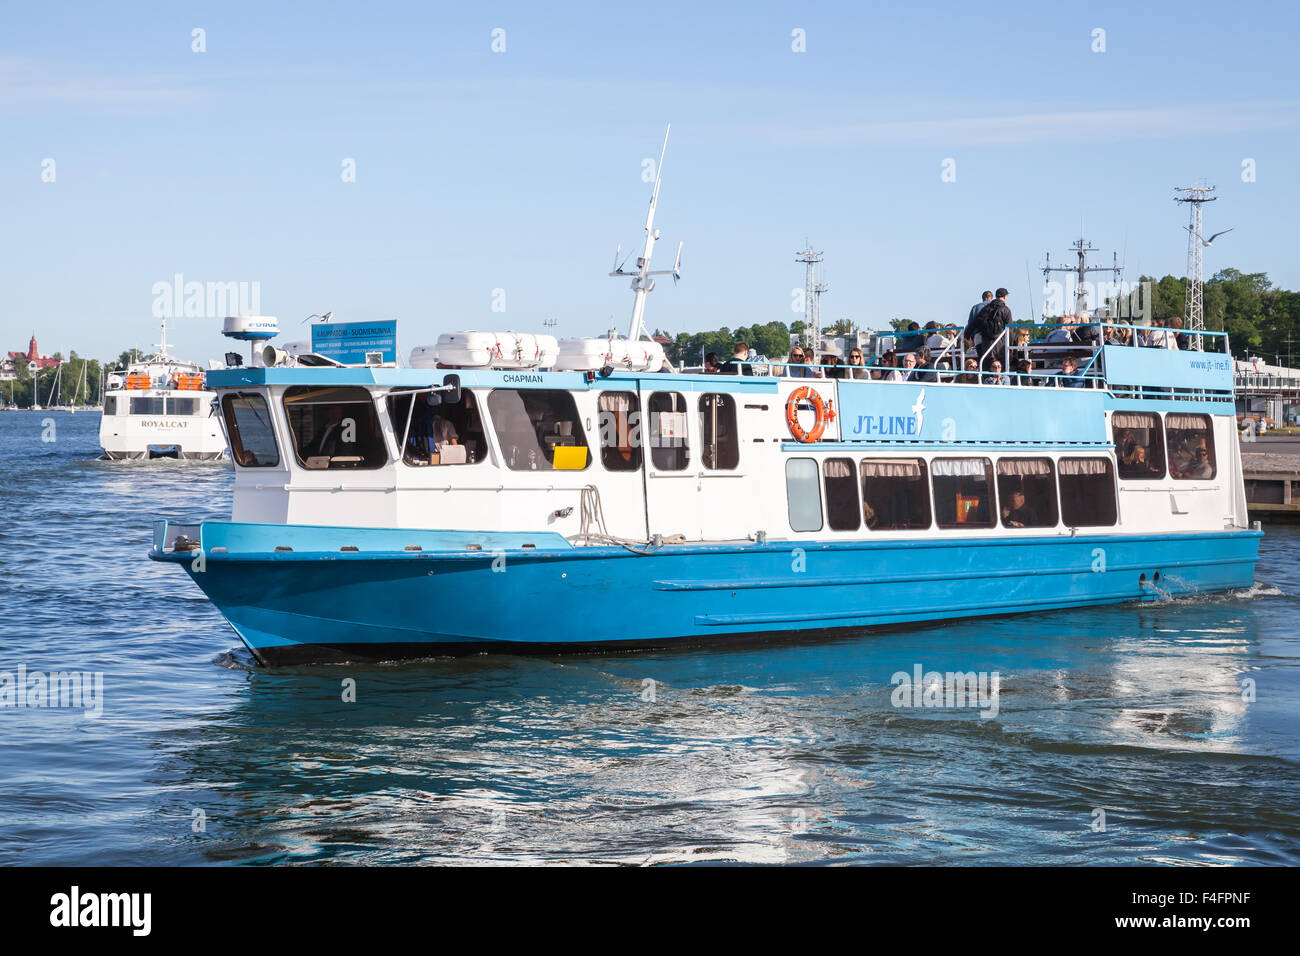 Helsinki, Finland - June 12, 2015: Small passenger ferry Chapman operated by JT-Line in port of Helsinki Stock Photo